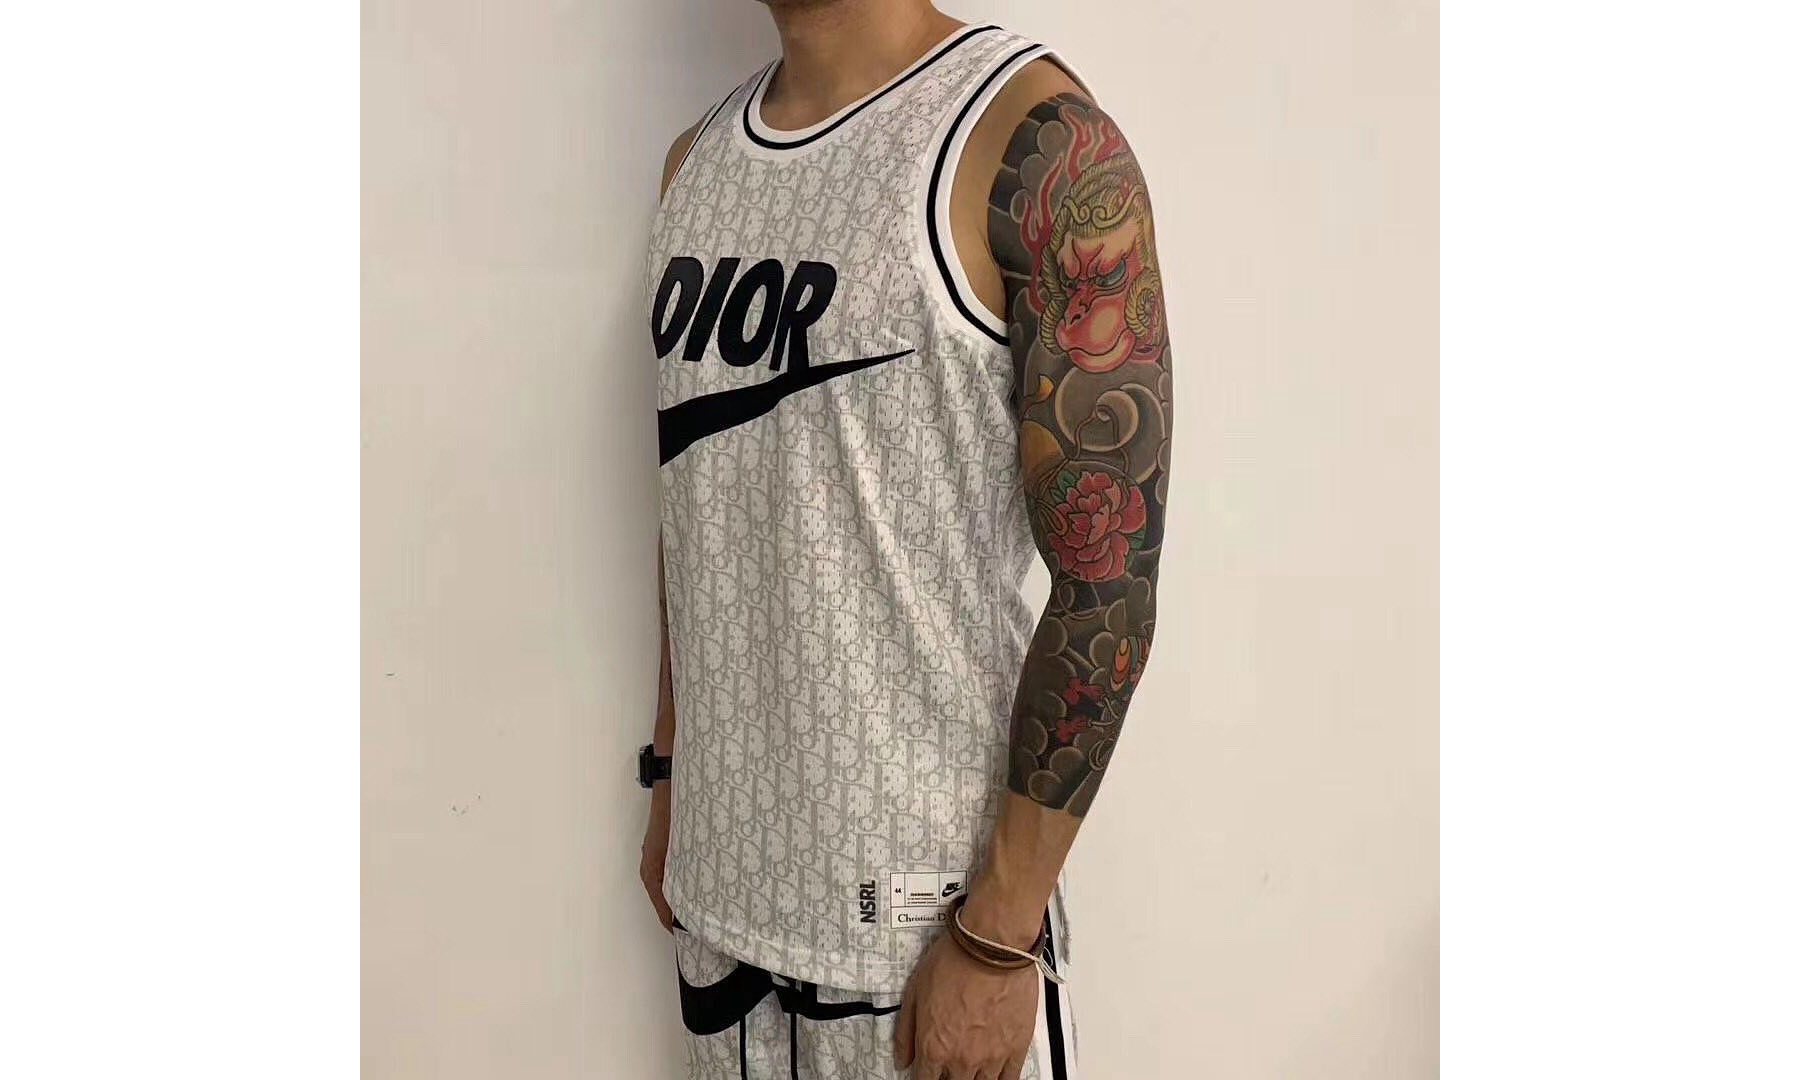 Dior x Jordan Brand 合作系列篮球服饰曝光更多细节